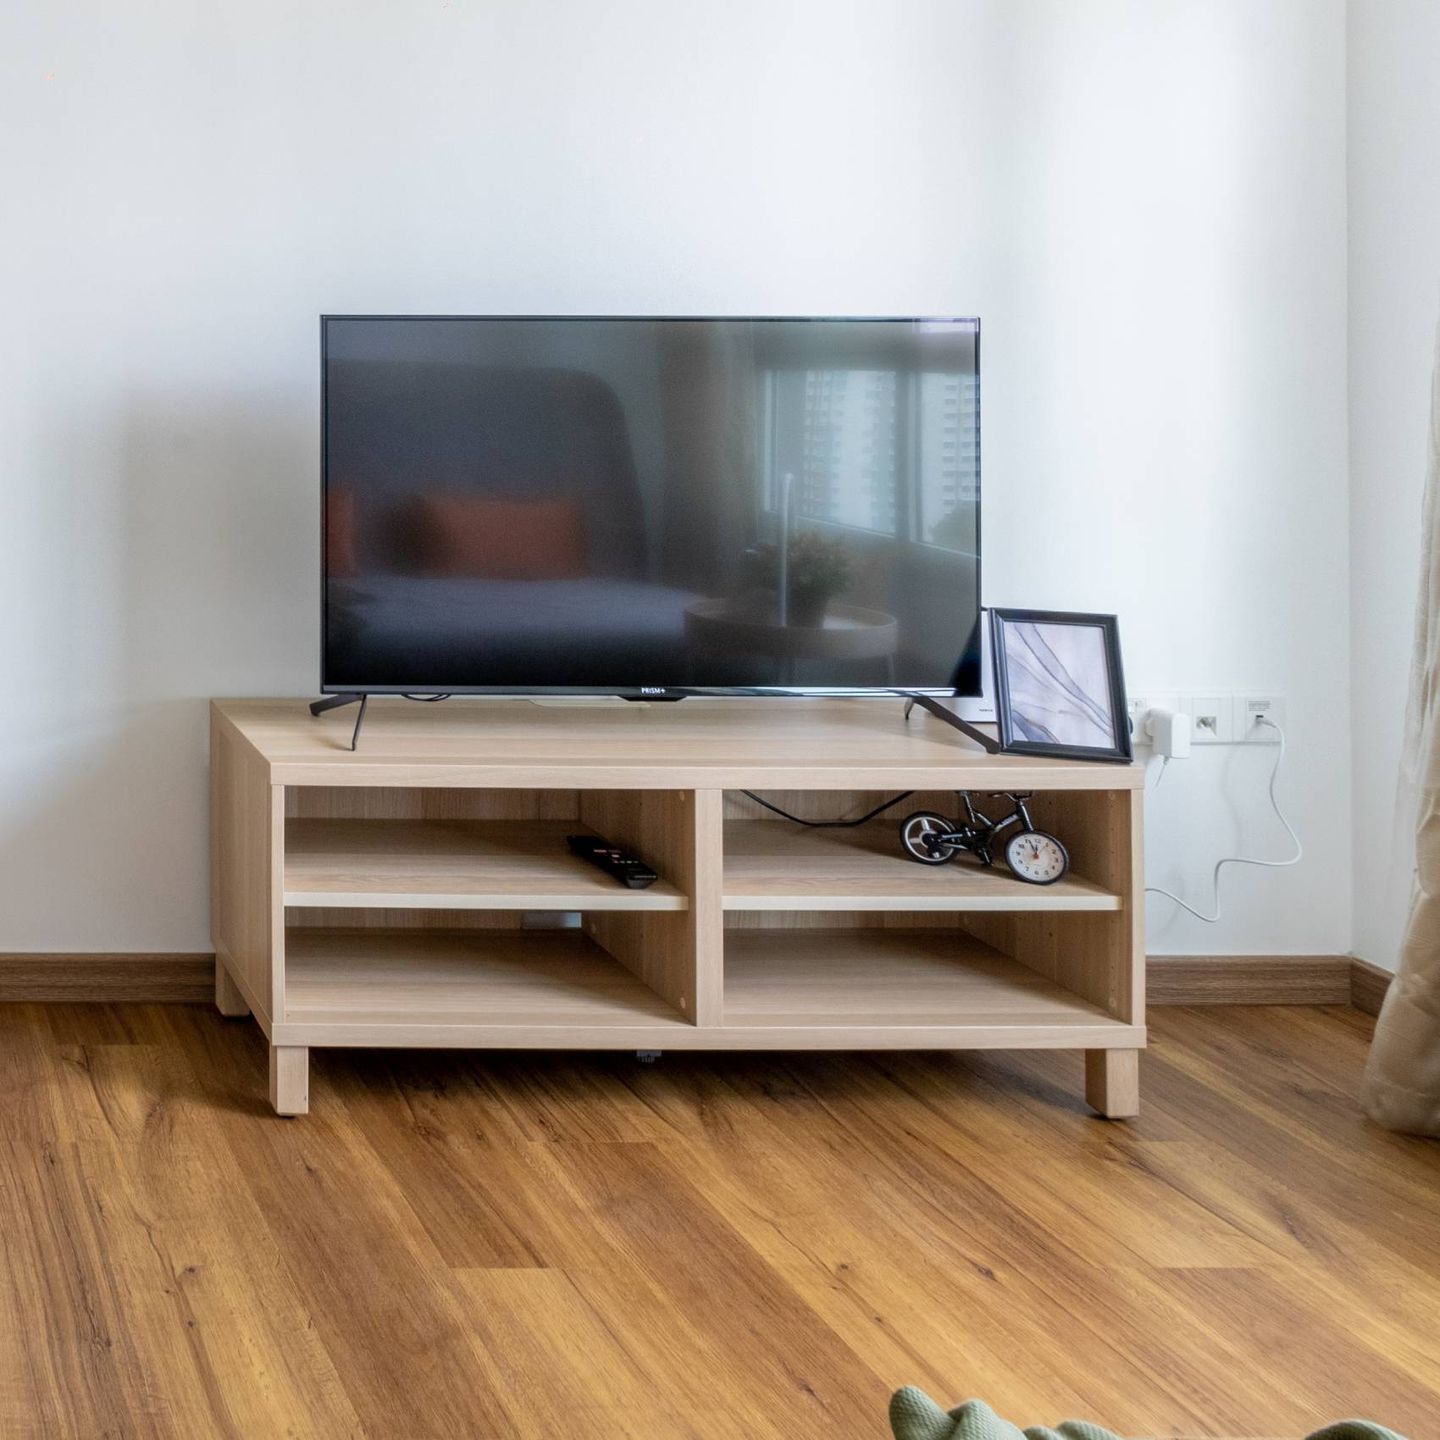 Wooden TV Unit With Shelves - Livspace